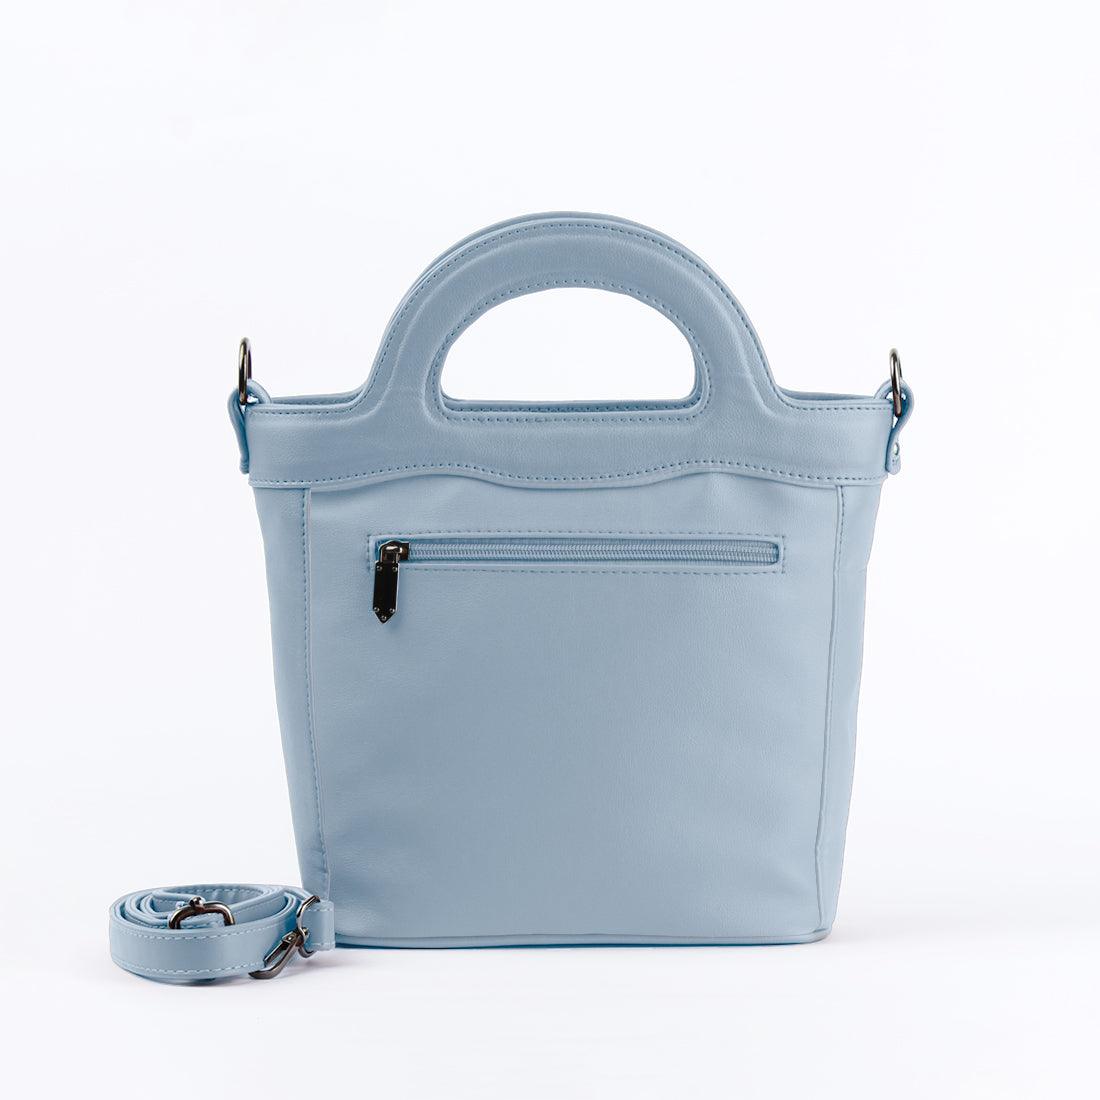 Blue Top Handle Handbag Floral Rose - CANVAEGYPT